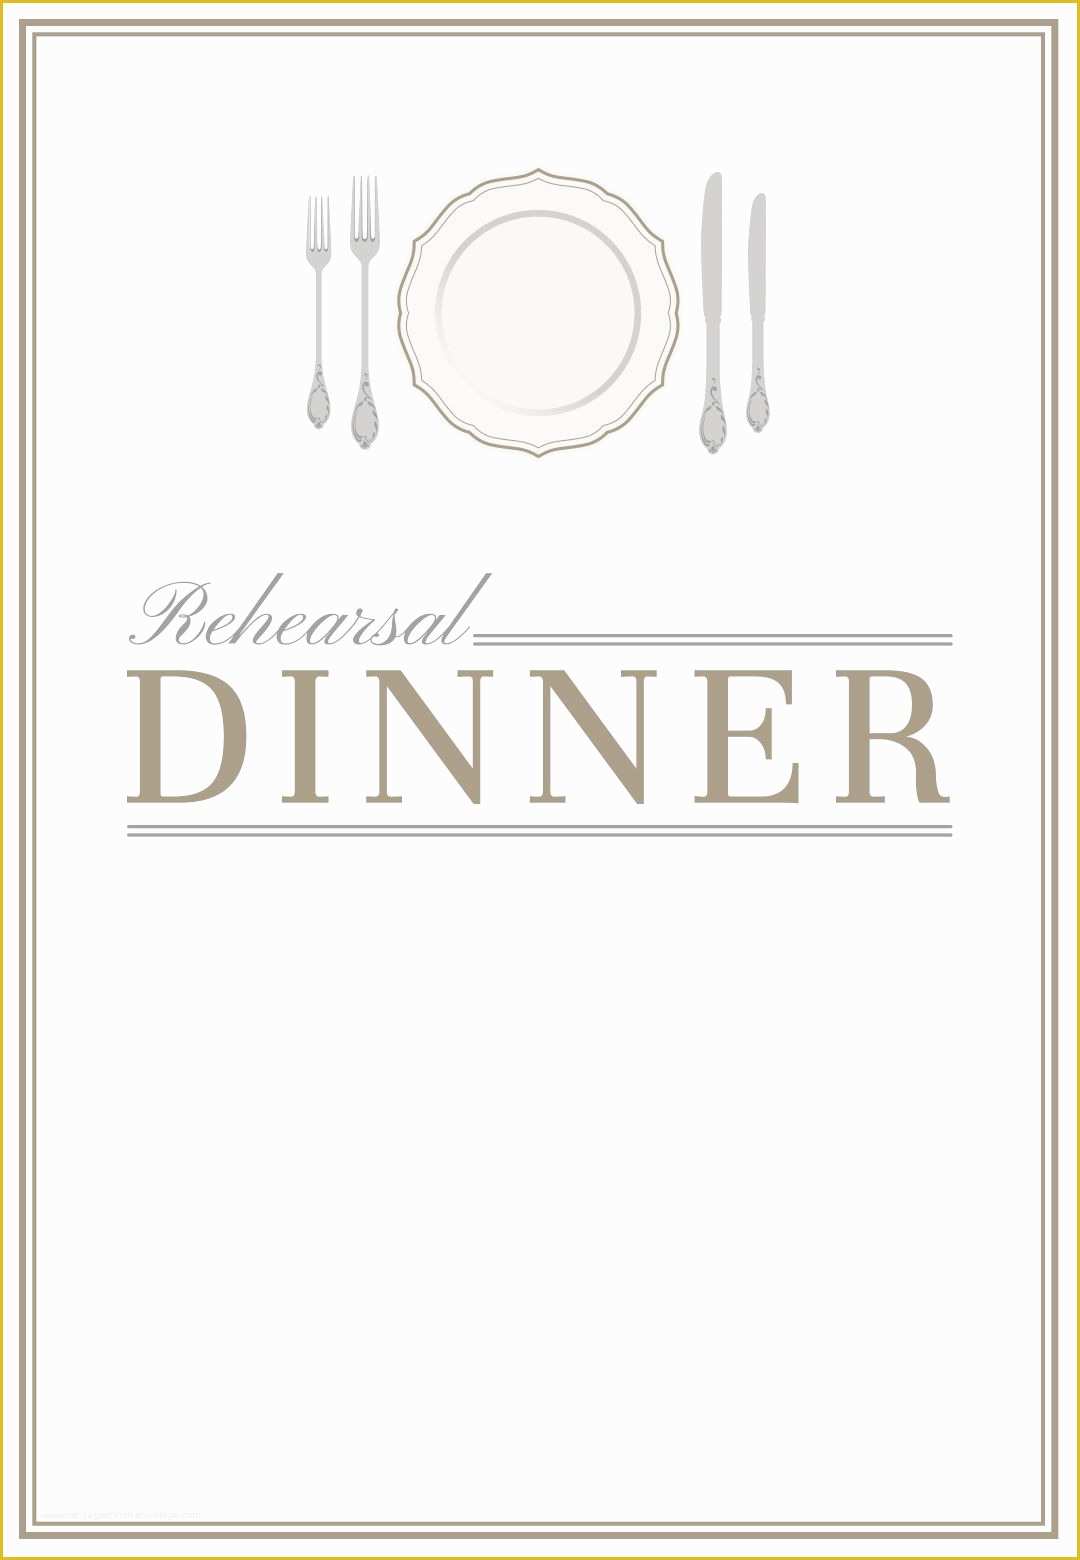 Dinner Invitation Card Template Free Of Elegant Setting Free Printable Rehearsal Dinner Party